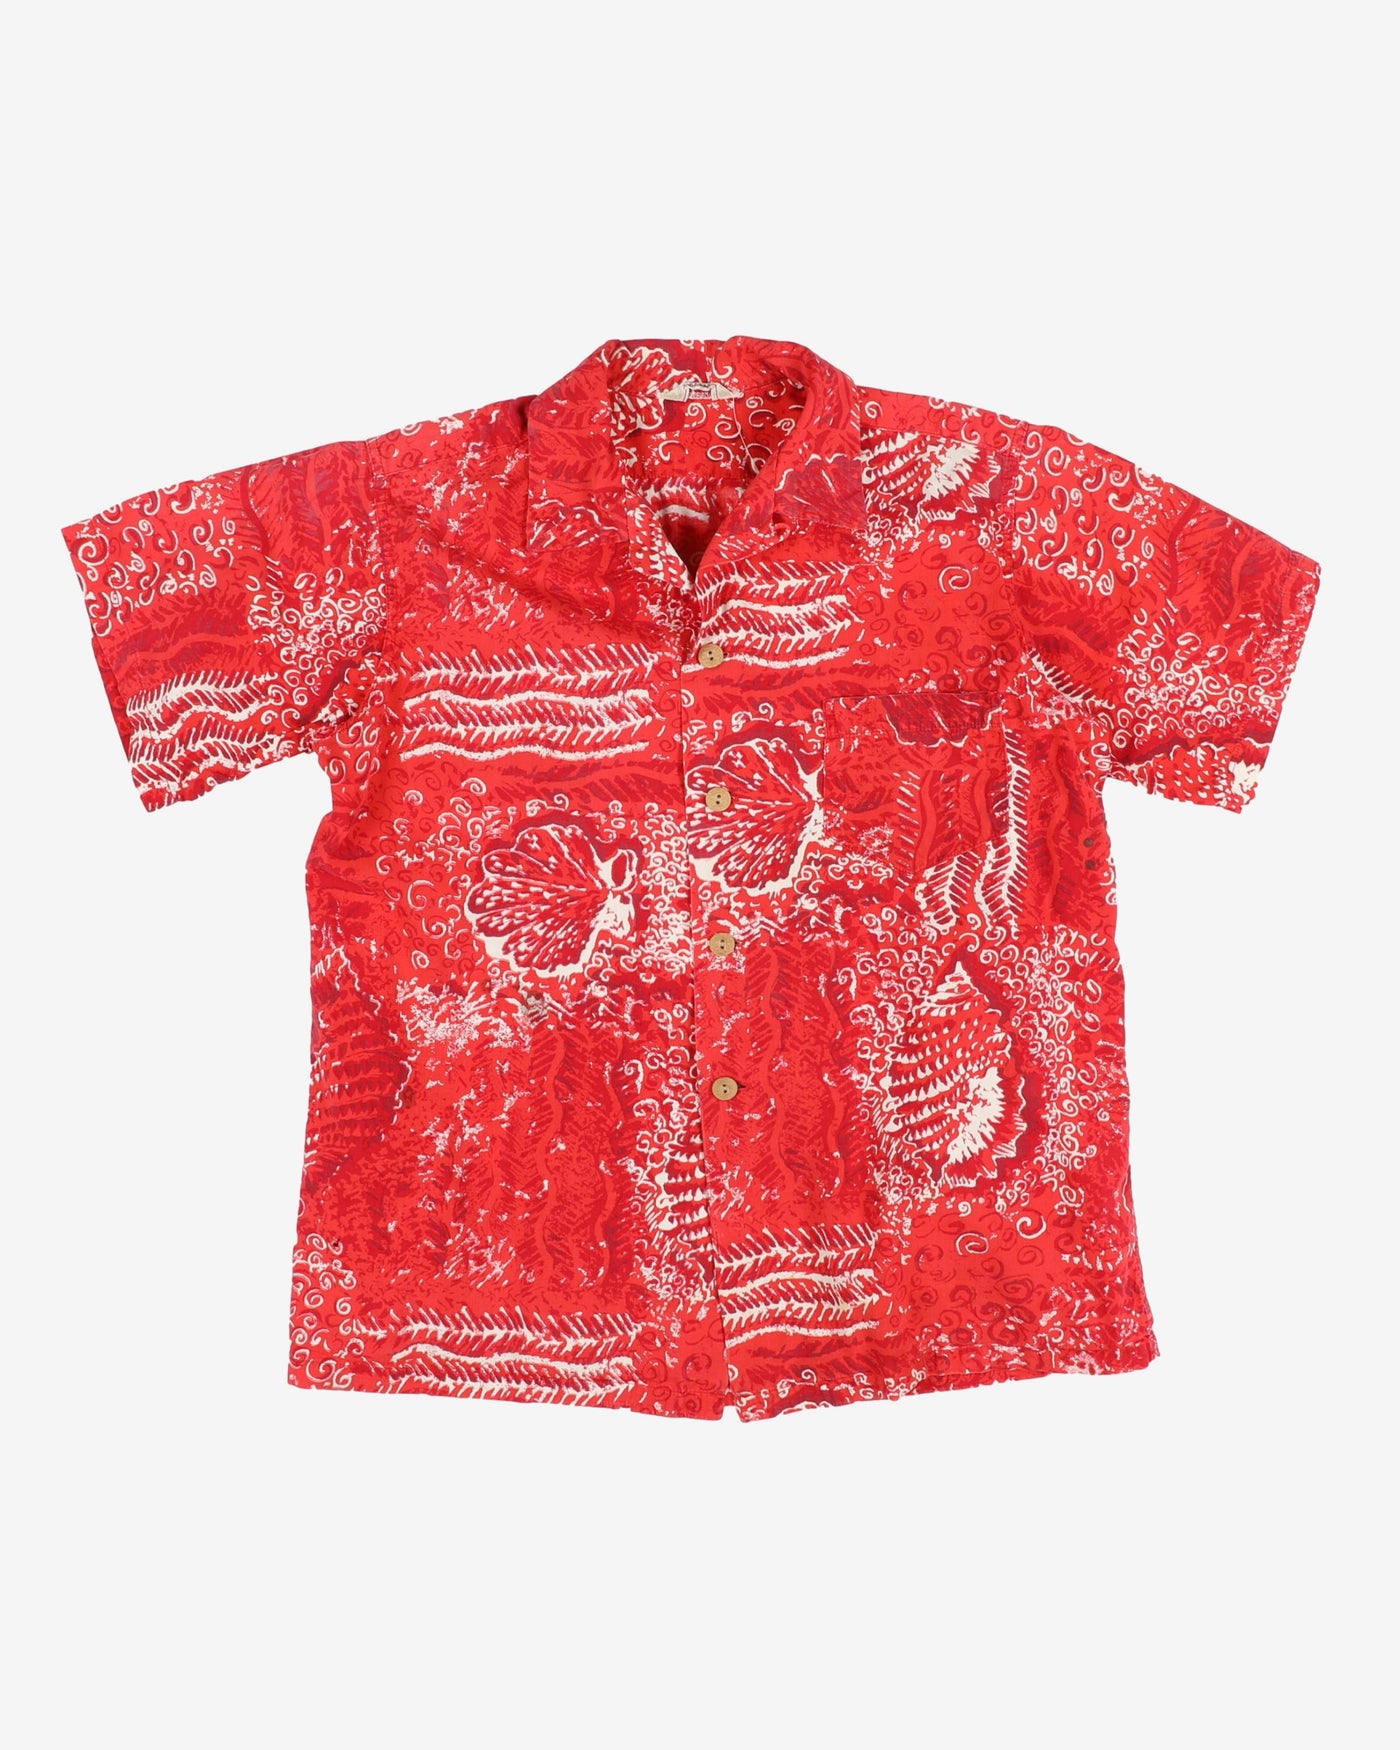 Vintage 60s Kamehameha Red Hawaiian Shirt - S